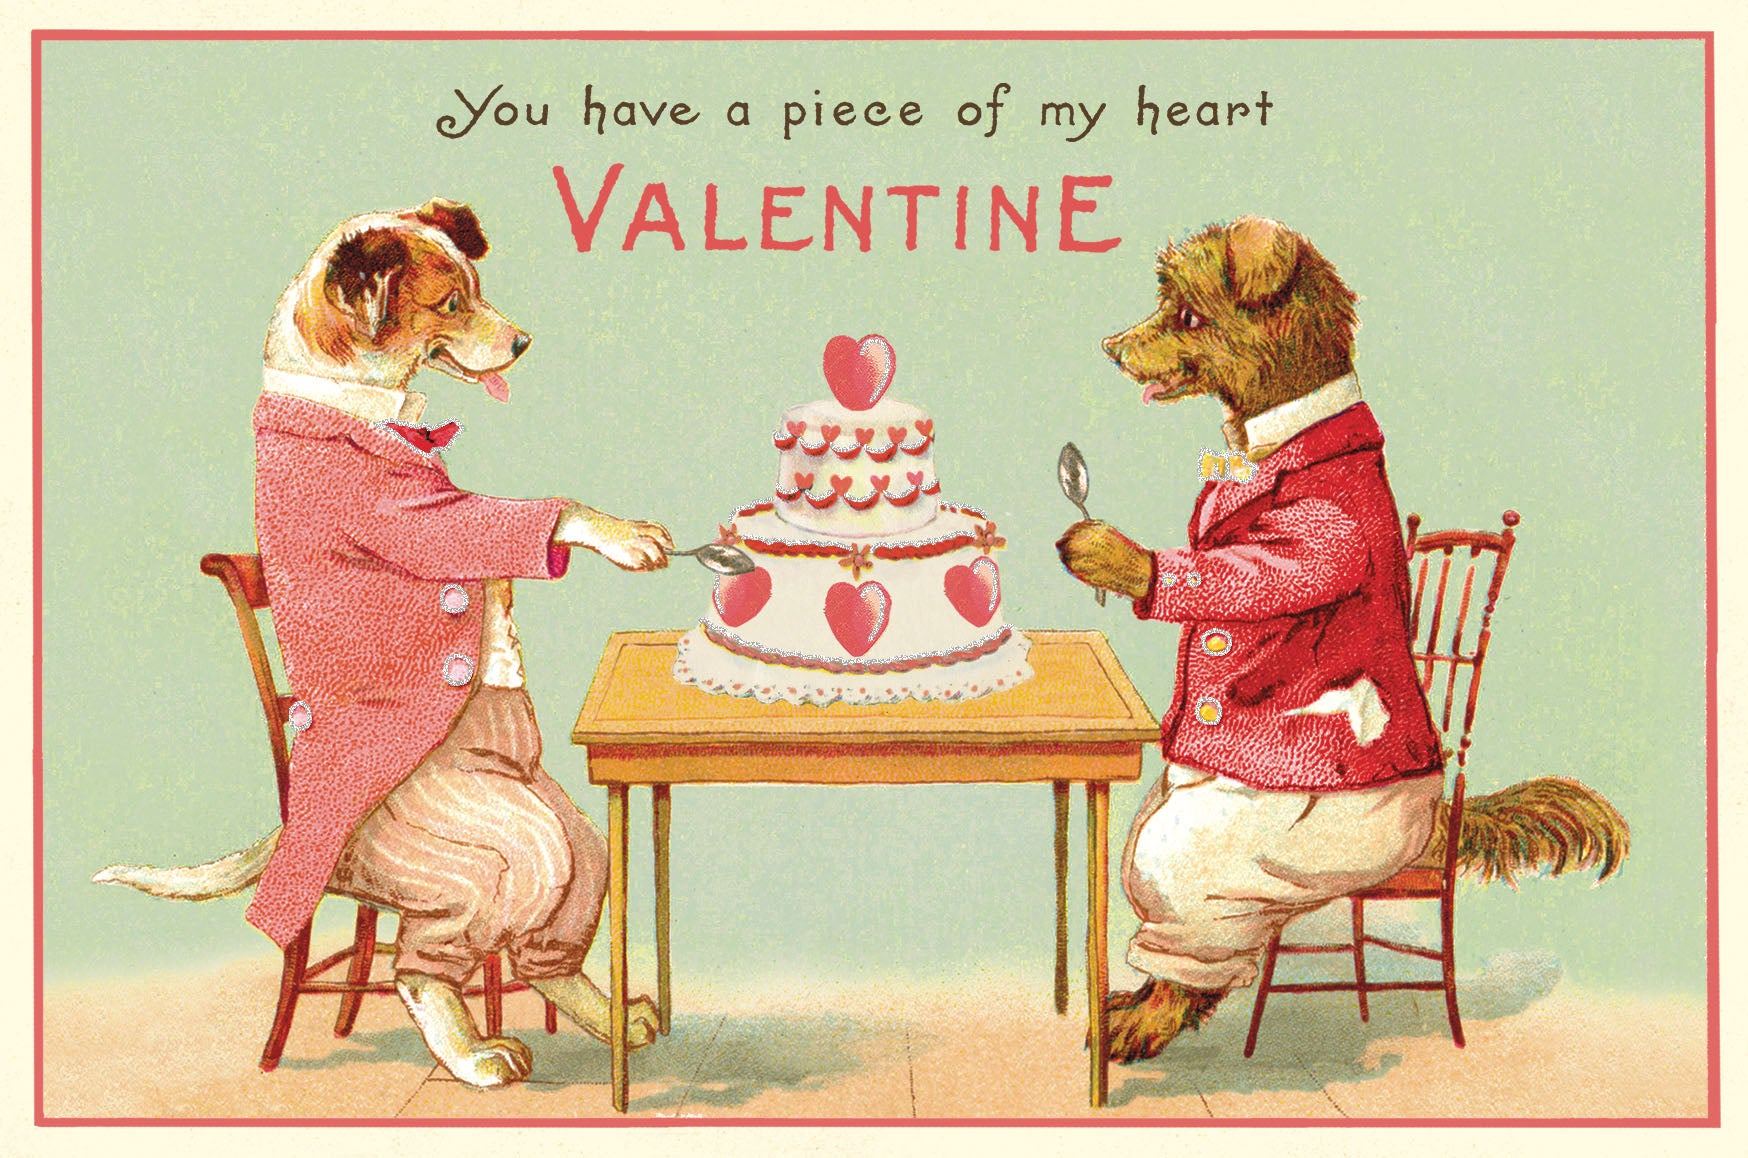 Vintage Valentine's Postcards